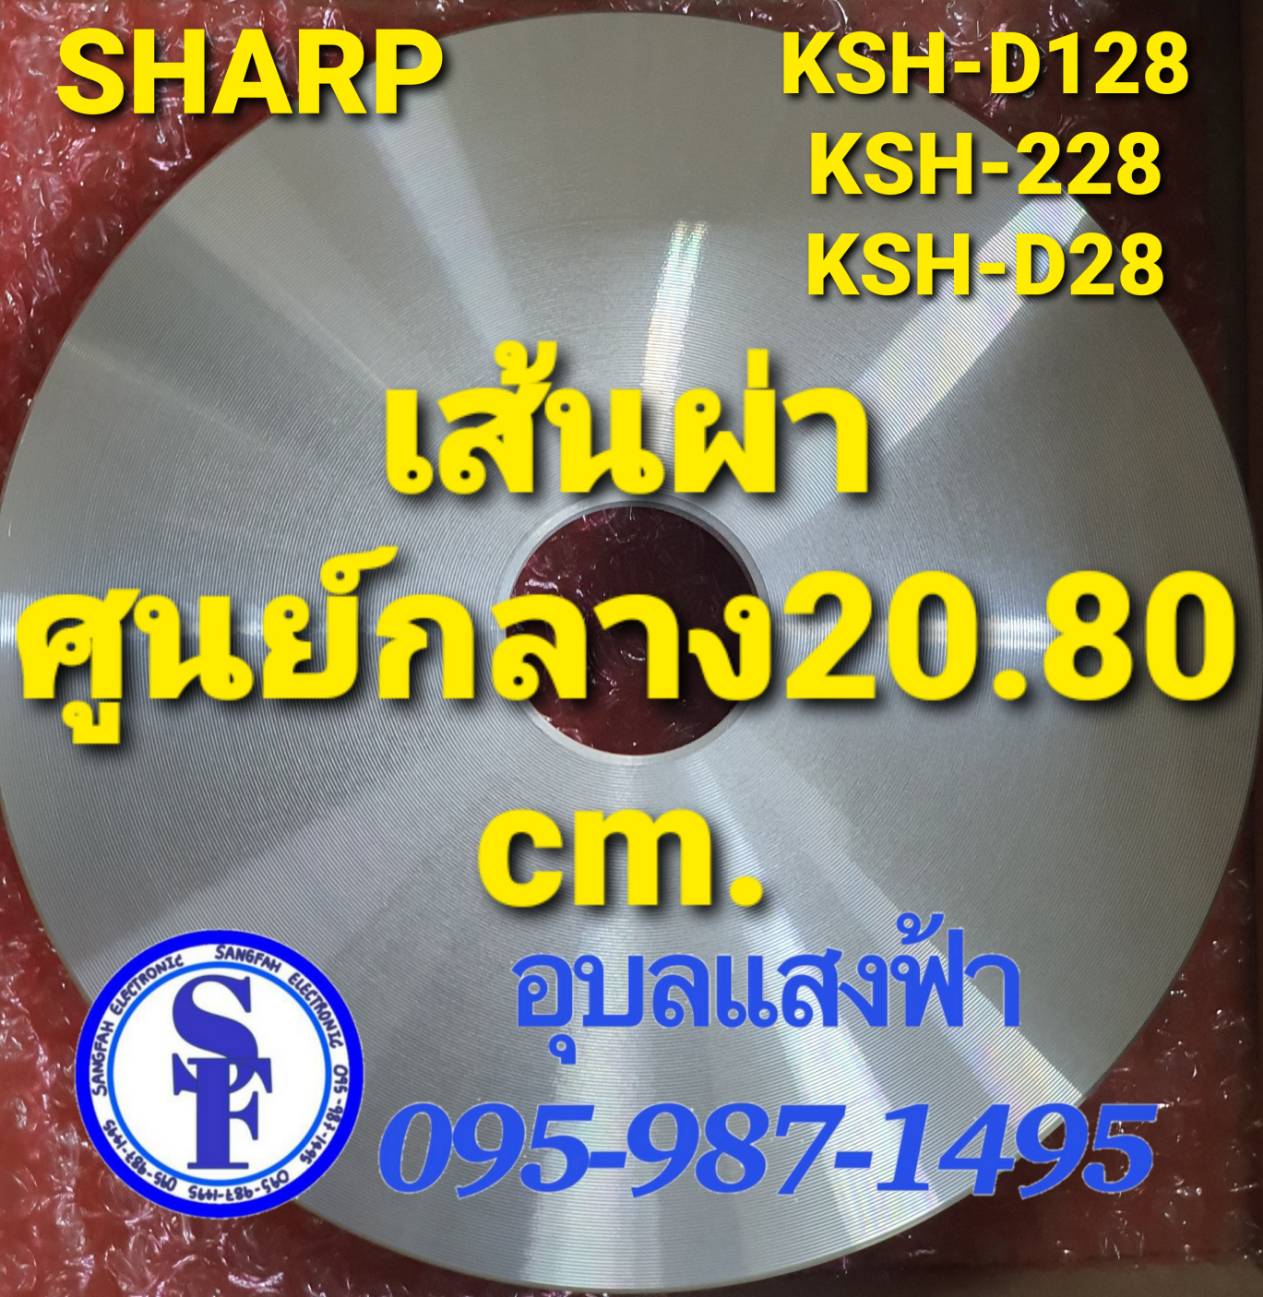 1C2011 แผ่นความร้อนชาร์ป(2.8ลิตร) KSH-D128 KSH-228 KSH-D28  แผ่นหม้อหุงข้าวSharp2.8L อะไหล่แท้ ความกว้าง20.80cm.